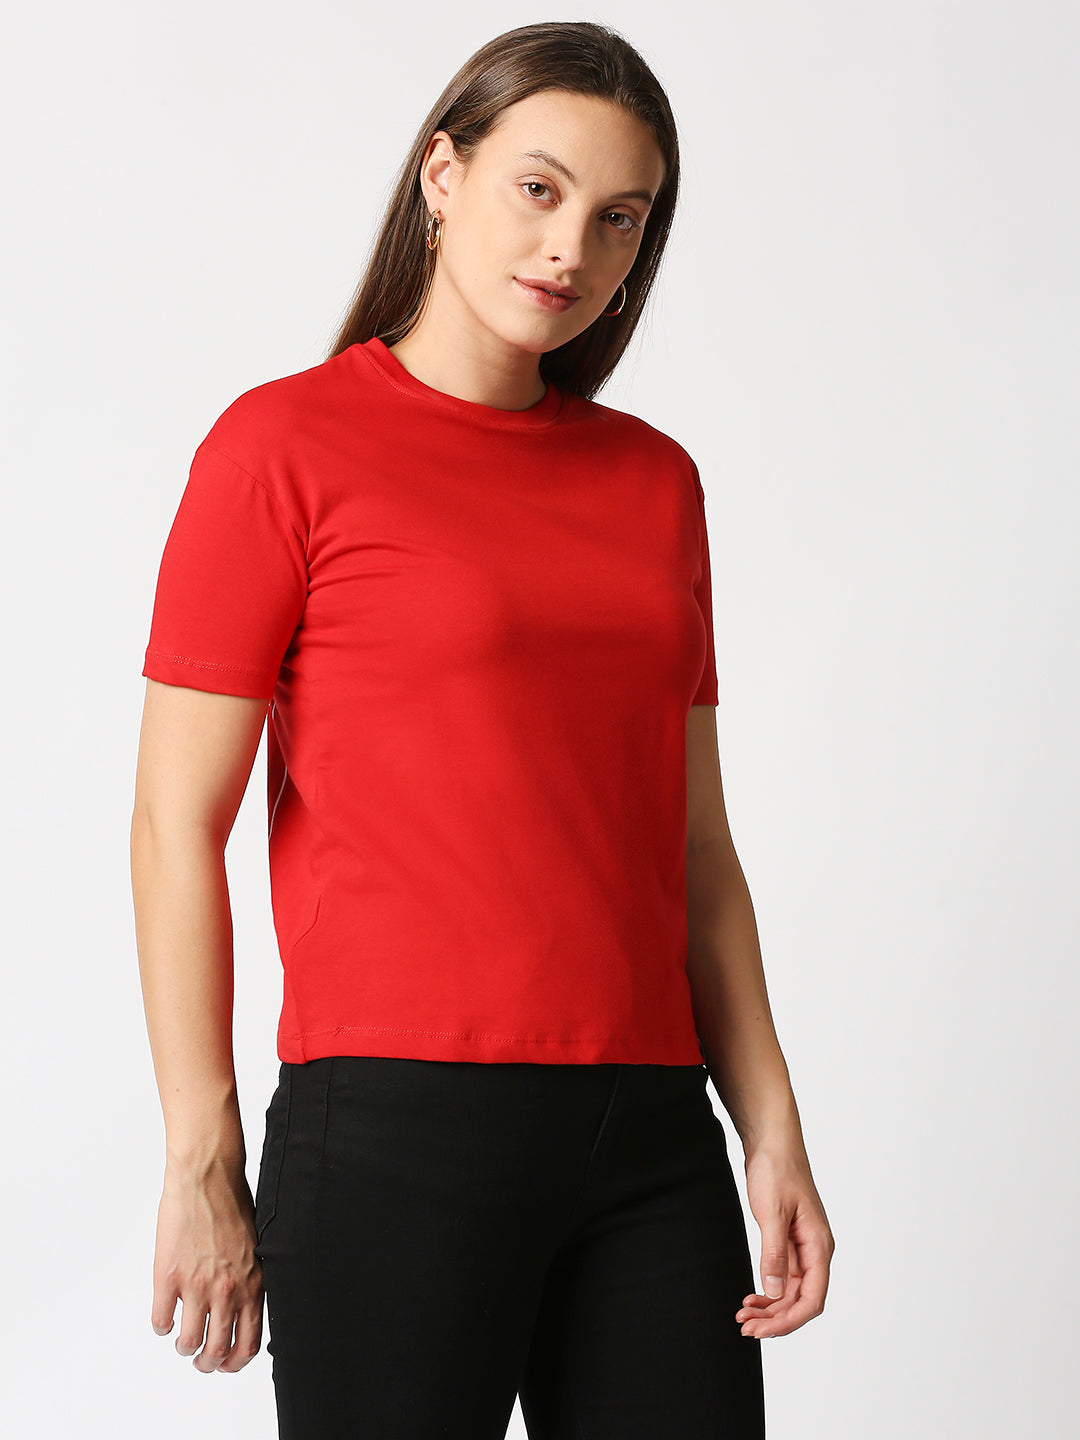 Buy Womenâ€™s Comfort fit Cherry Red Back print T-shirt